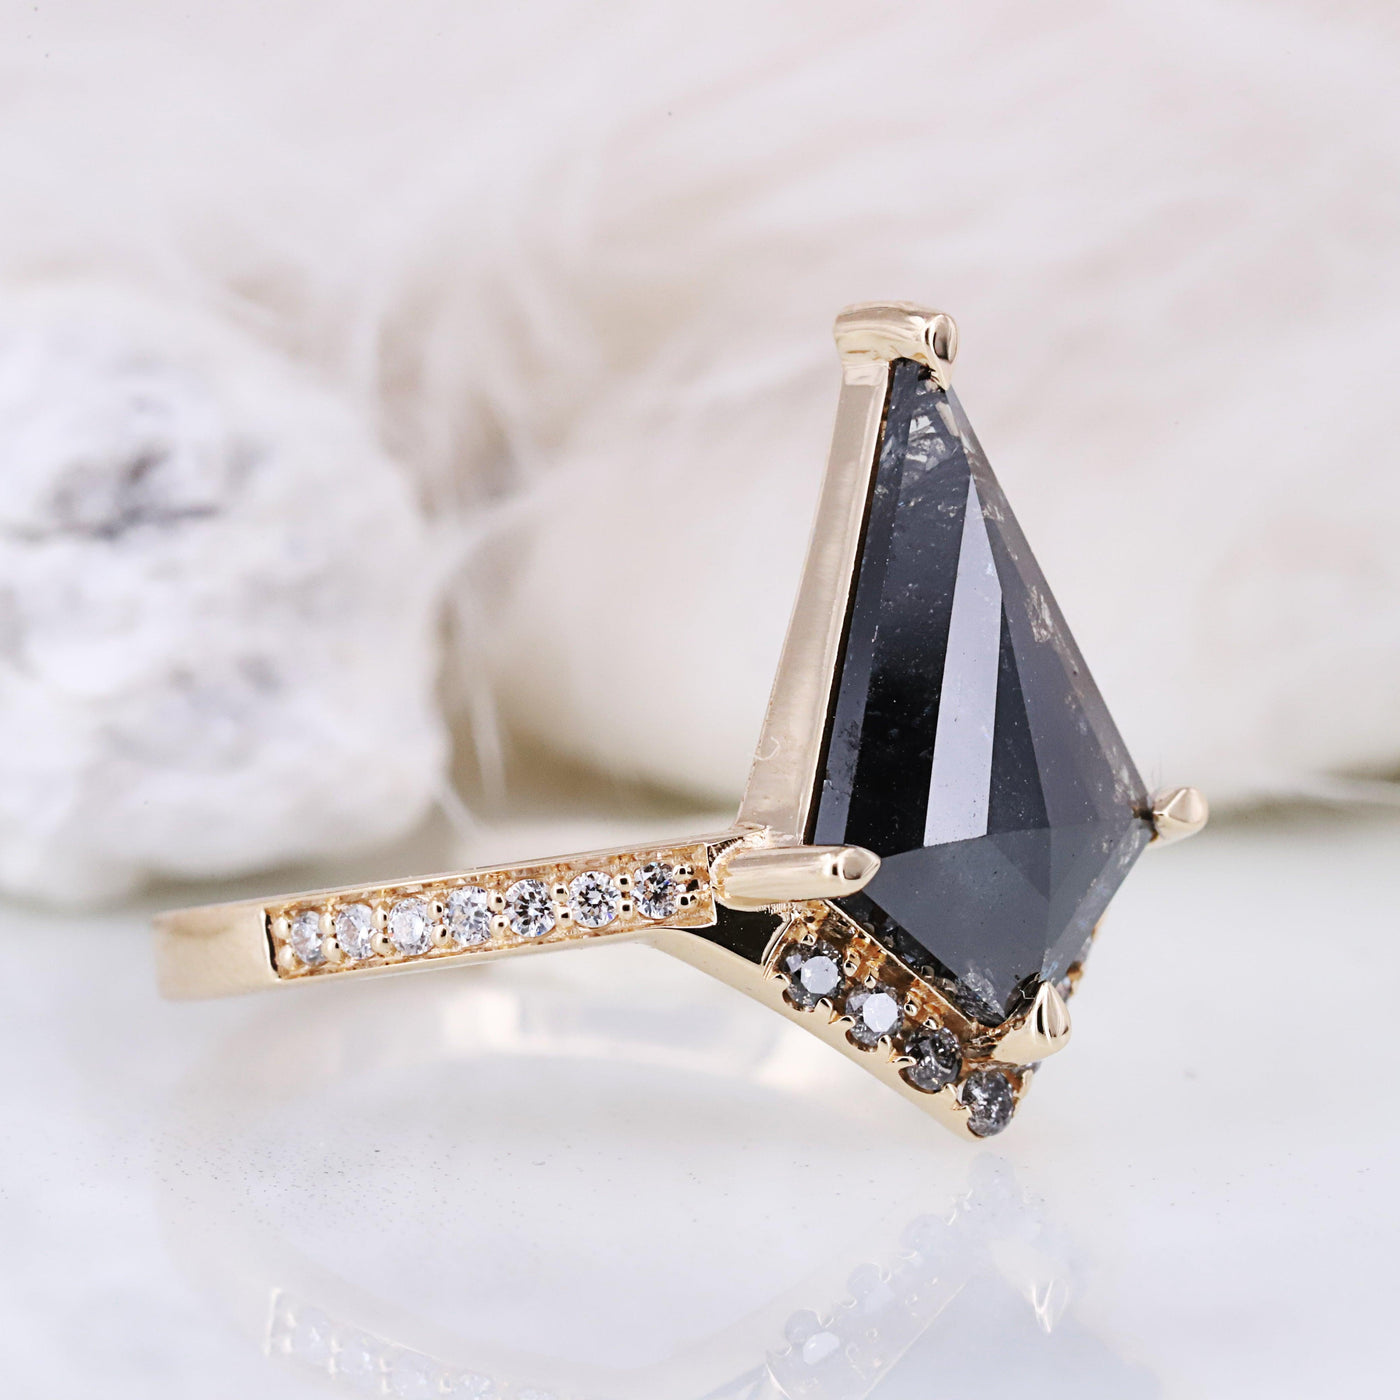 Salt and pepper kite diamond Ring Engagement ring Natural diamond ring - Rubysta